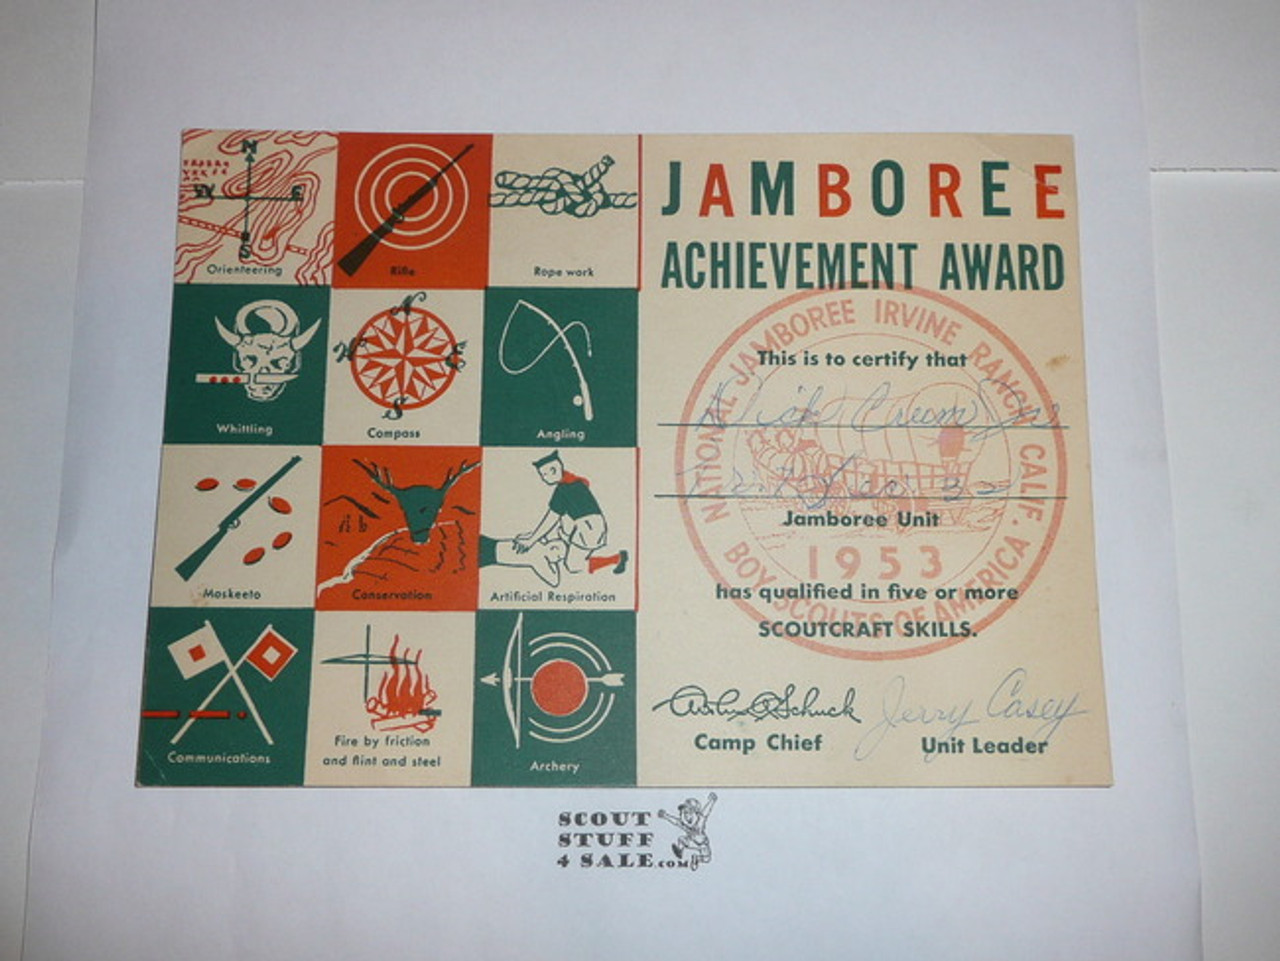 1953 National Jamboree Achievement Award Certificate, presented